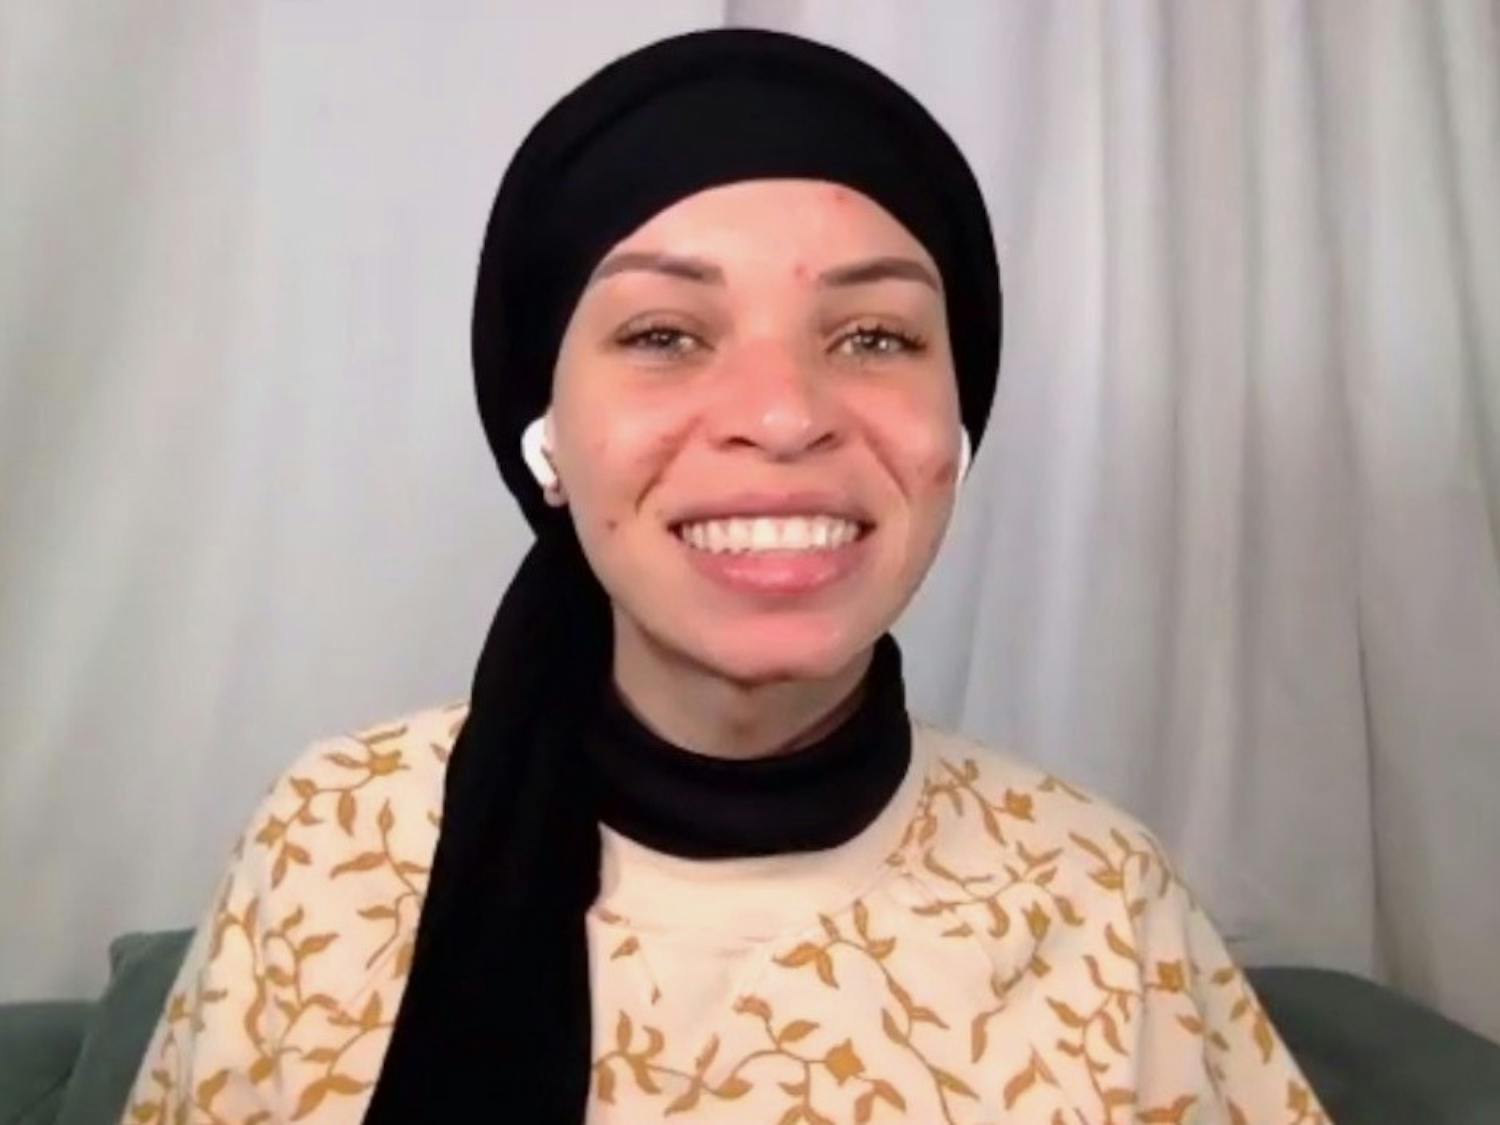 Muslim activist and educator Blair Imani spoke to students on Monday. 